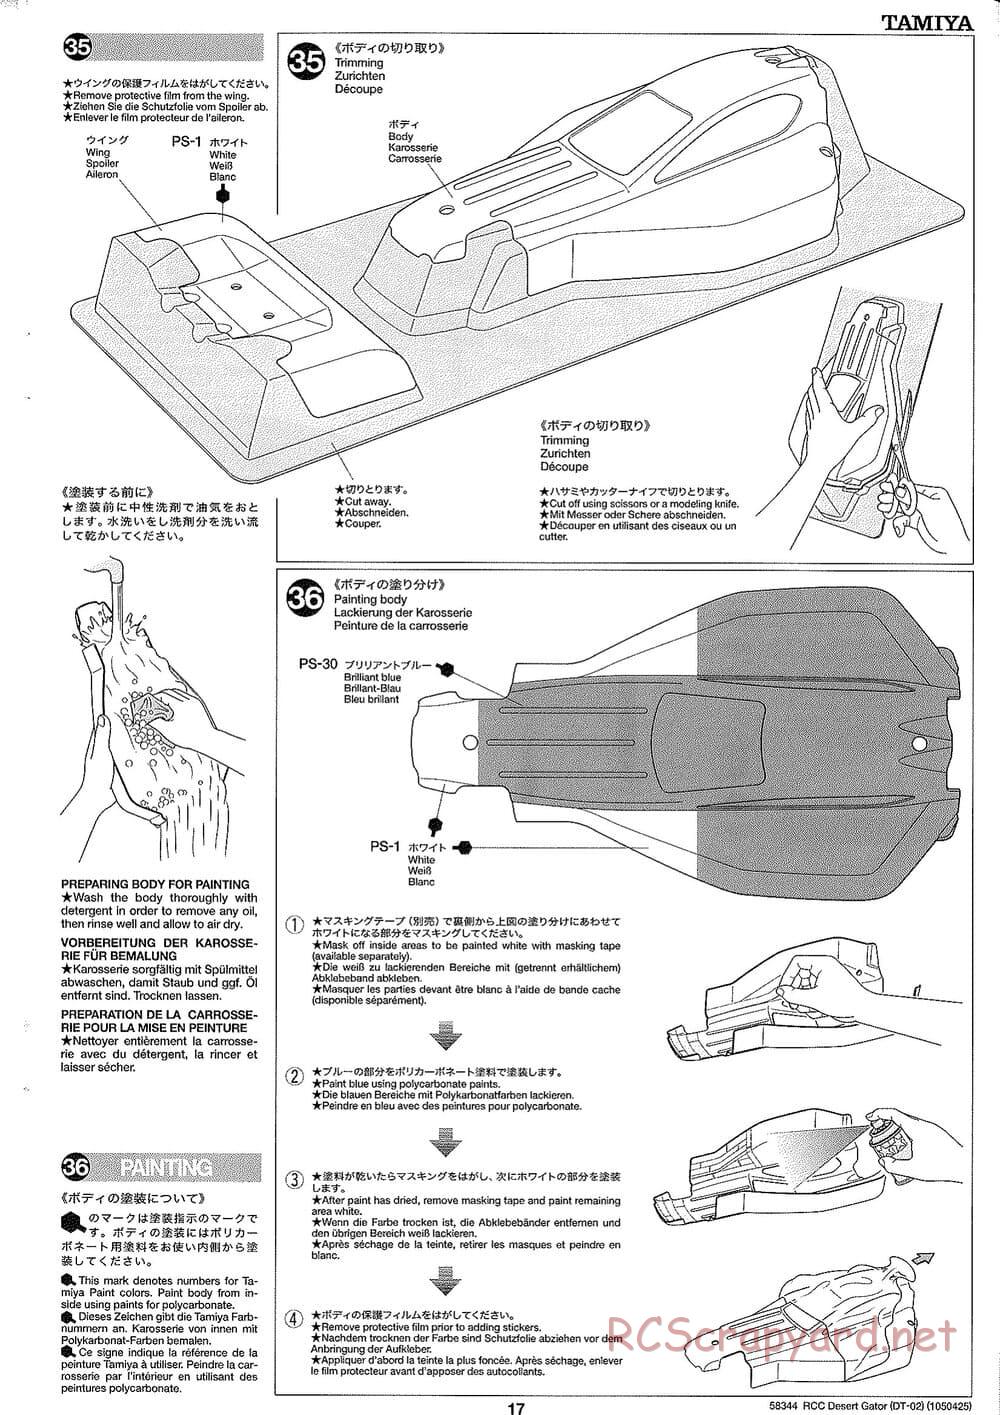 Tamiya - Desert Gator Chassis - Manual - Page 17